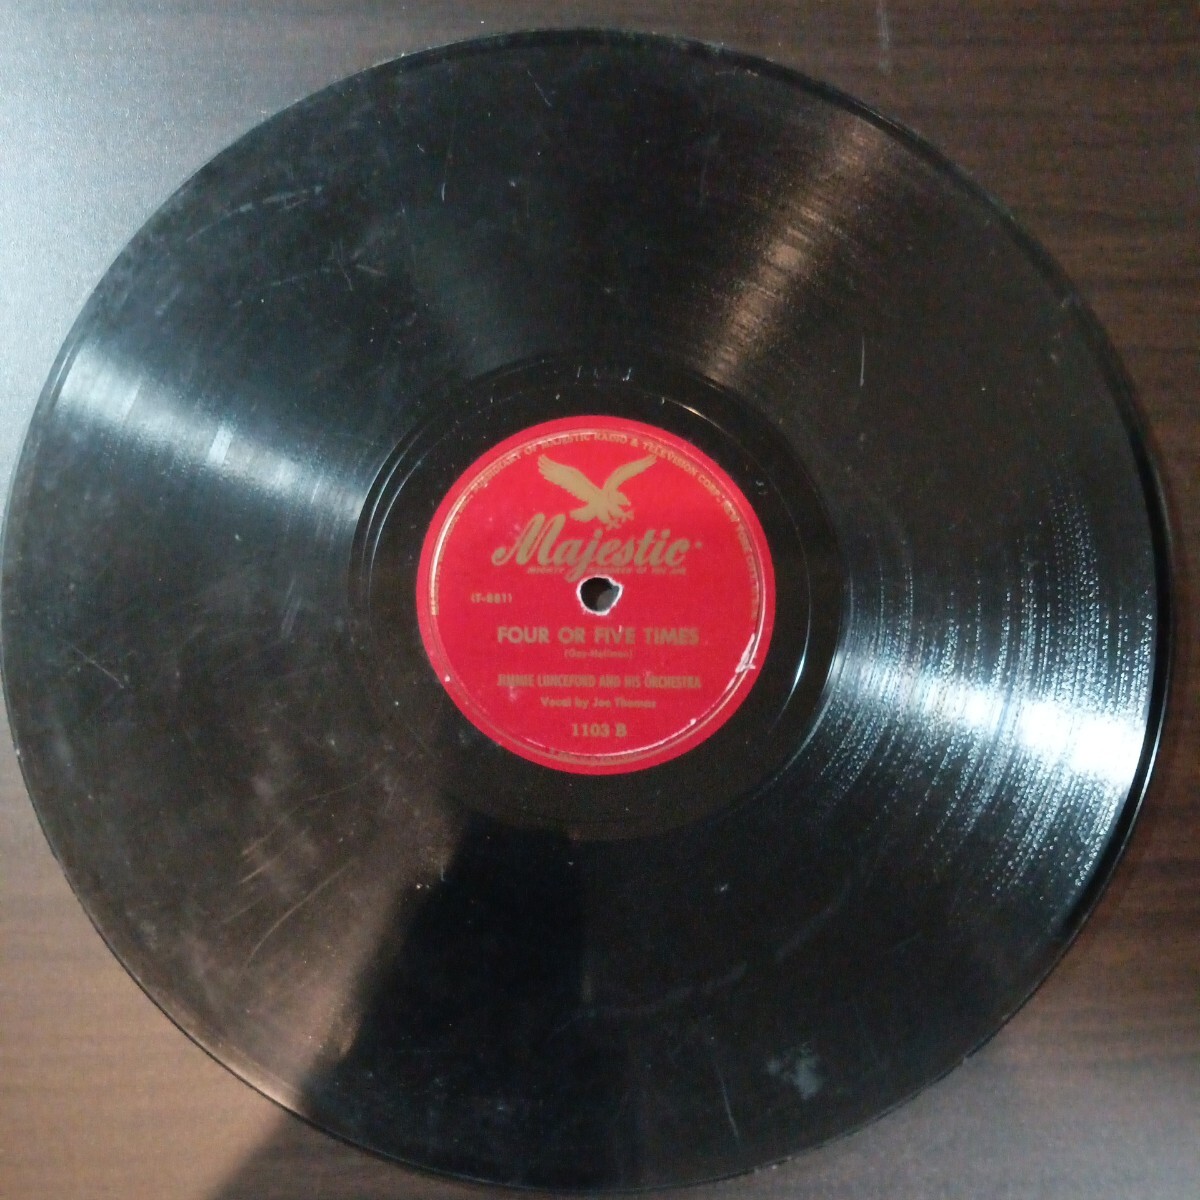  rice majestic 10.SP!jimi-* Ran s Ford. record! antique retro all ti-z pops Jazz Dance music 